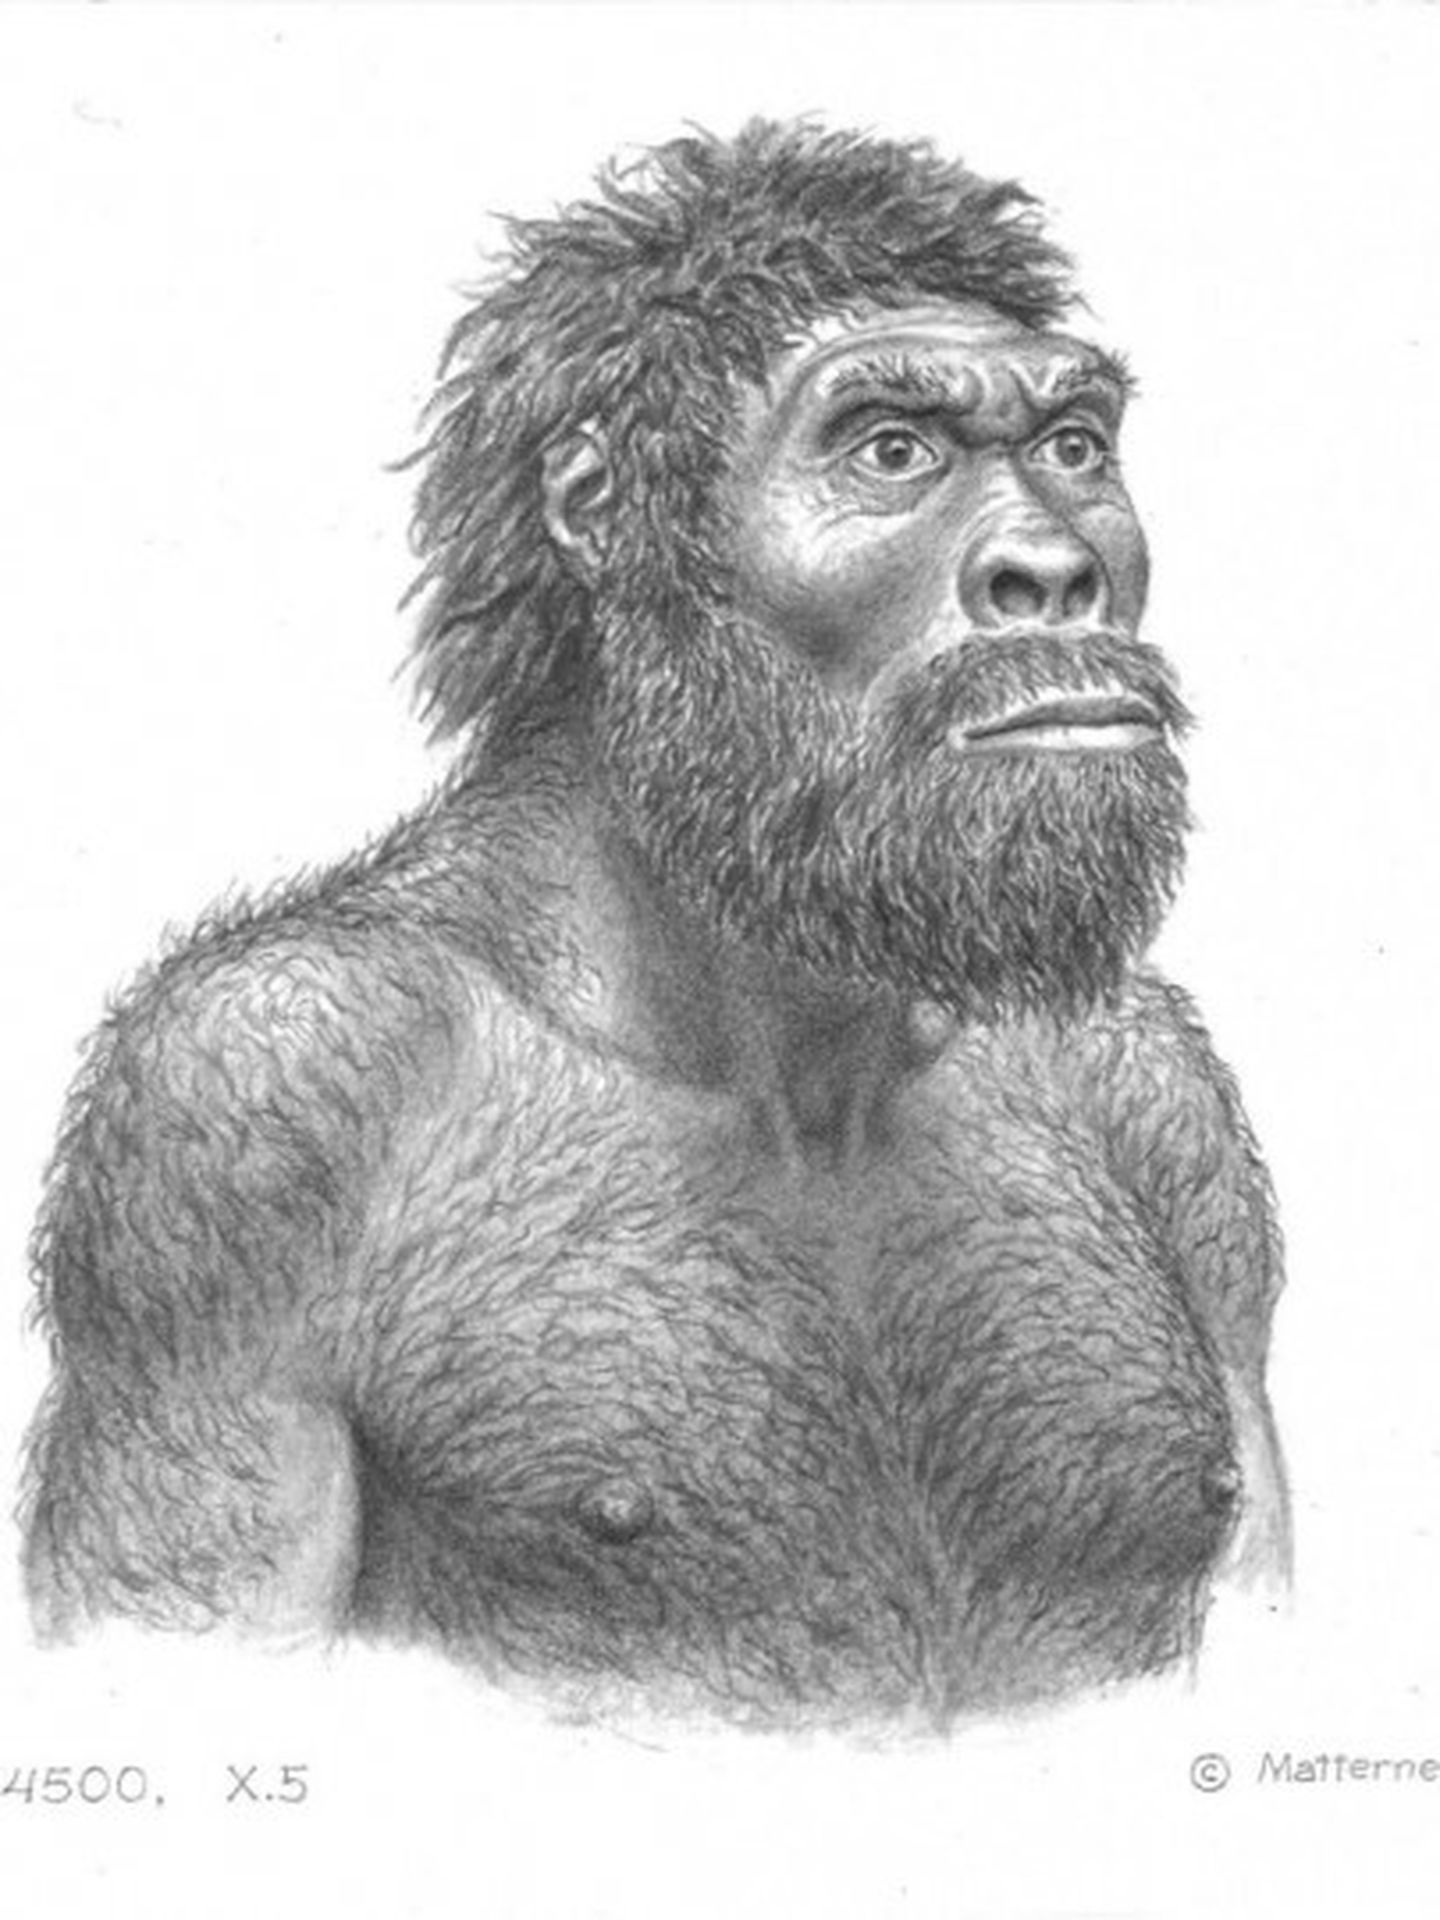 El 'Homo erectus' de Dmanisi (Jay Matternes)